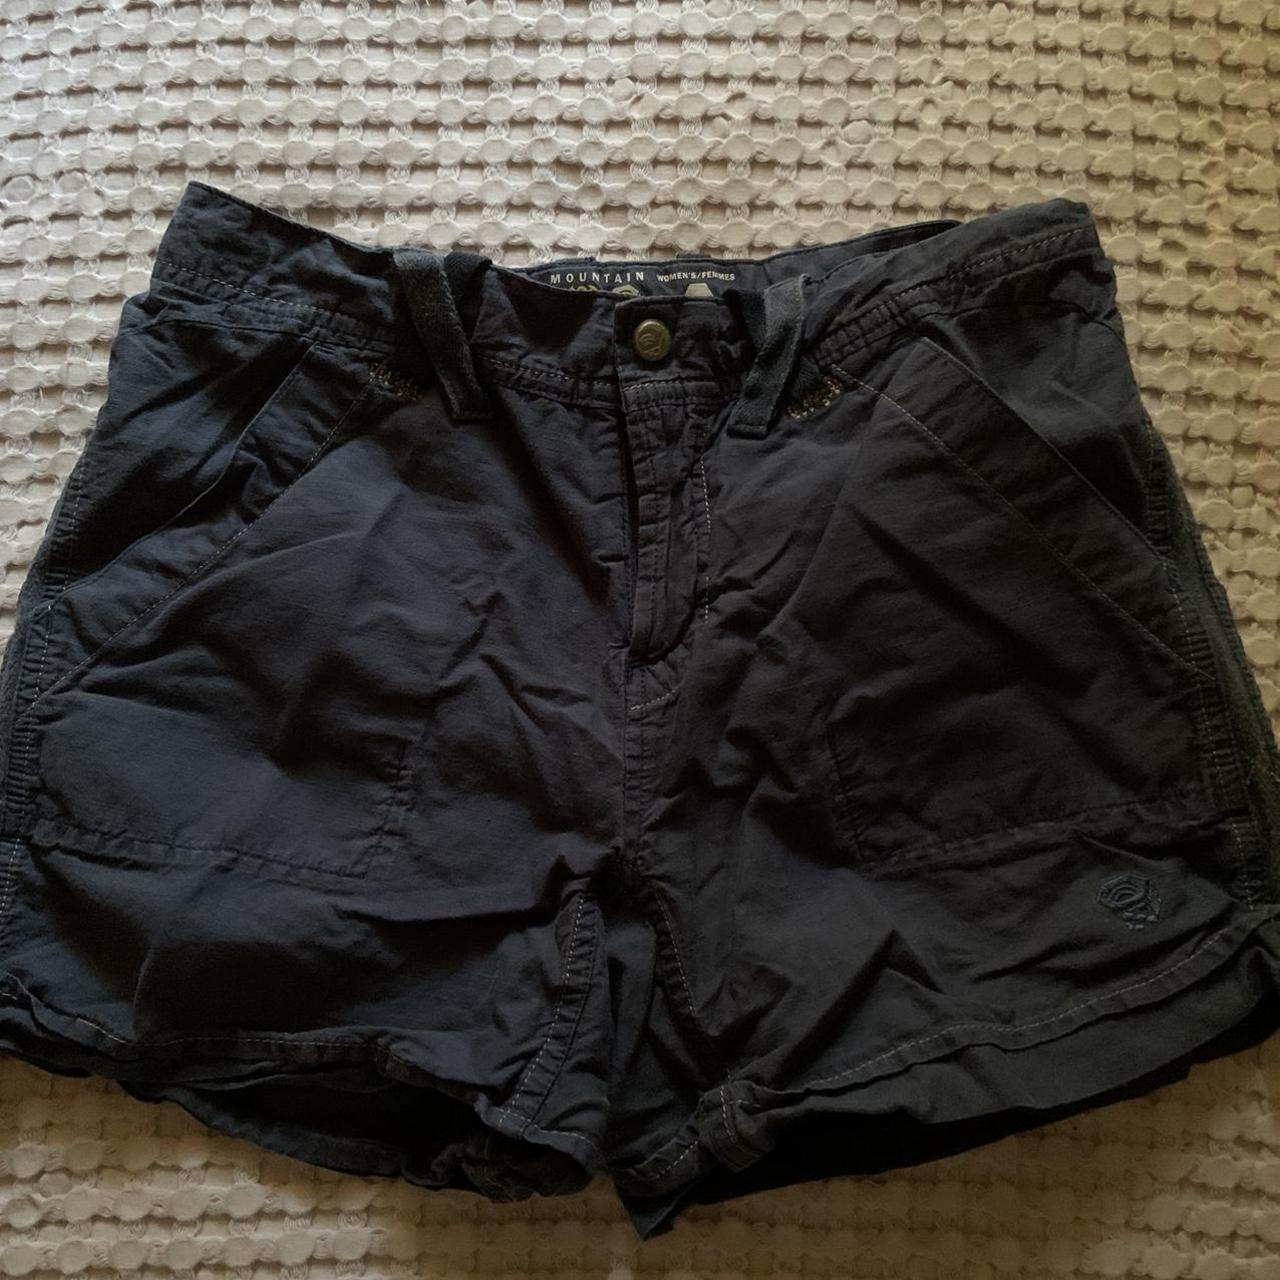 EMS Women's Freescape Insulated II Shell Pants - Depop